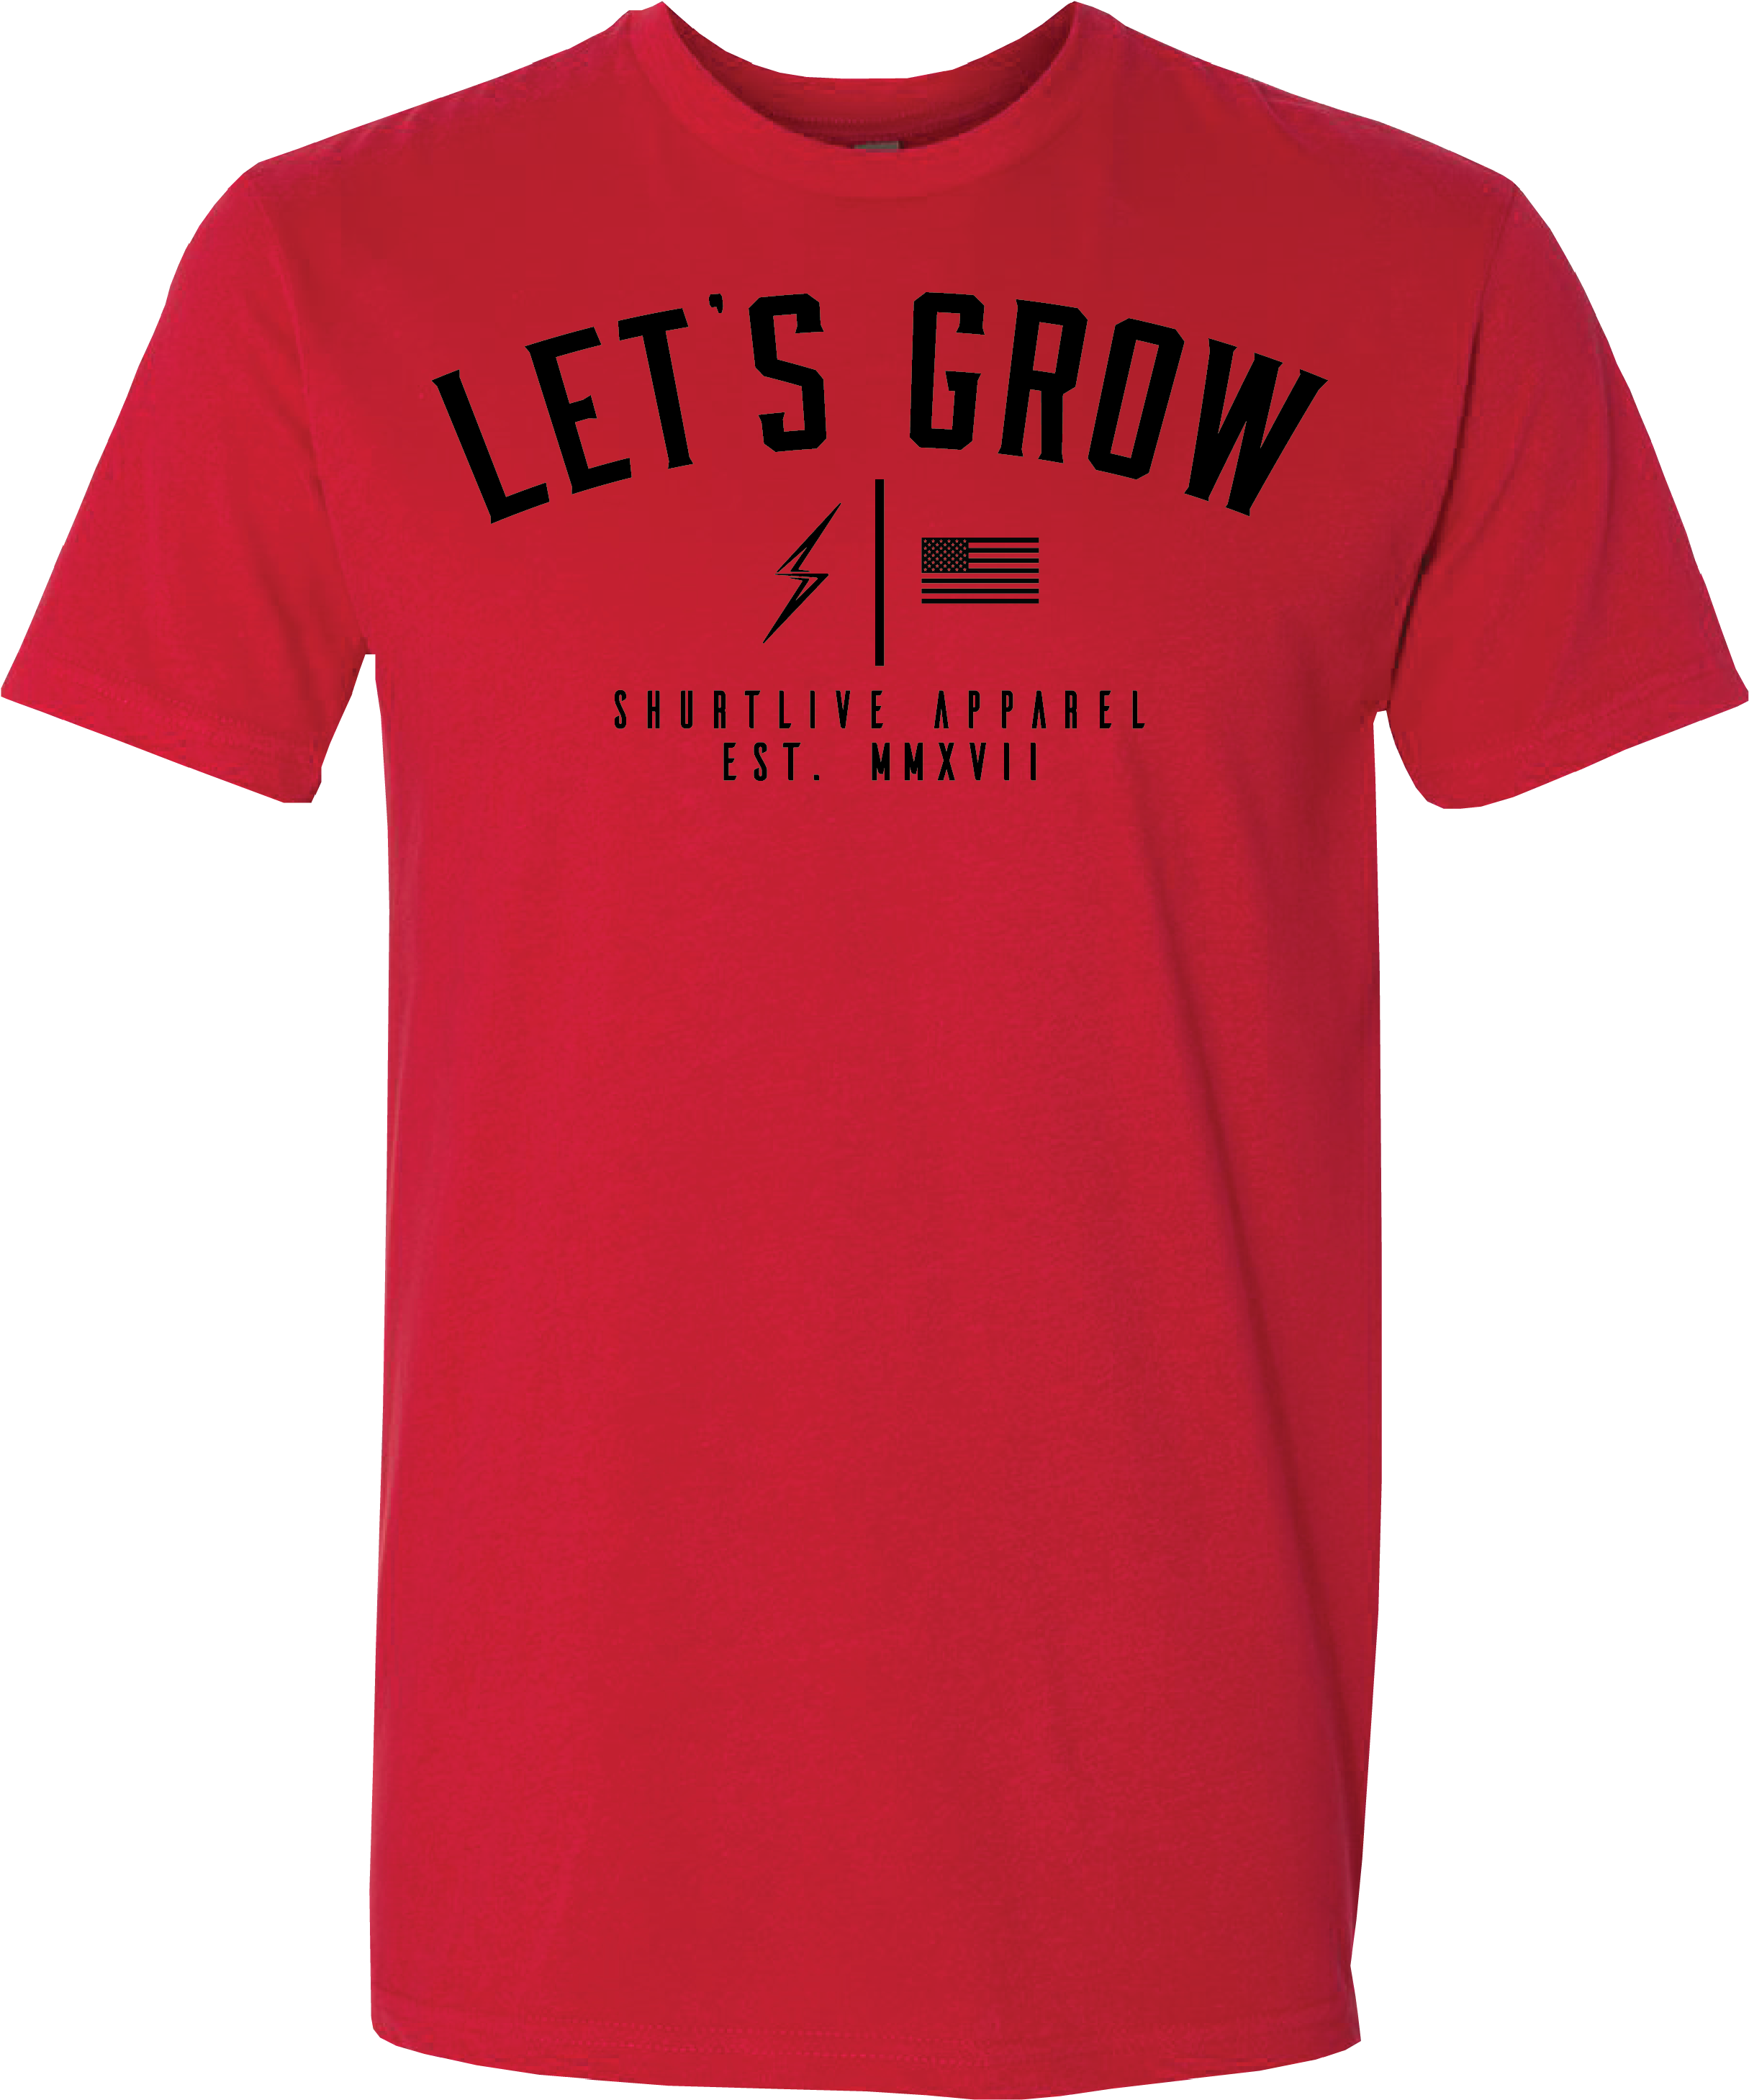 Let’s Grow Tee-Red/Black